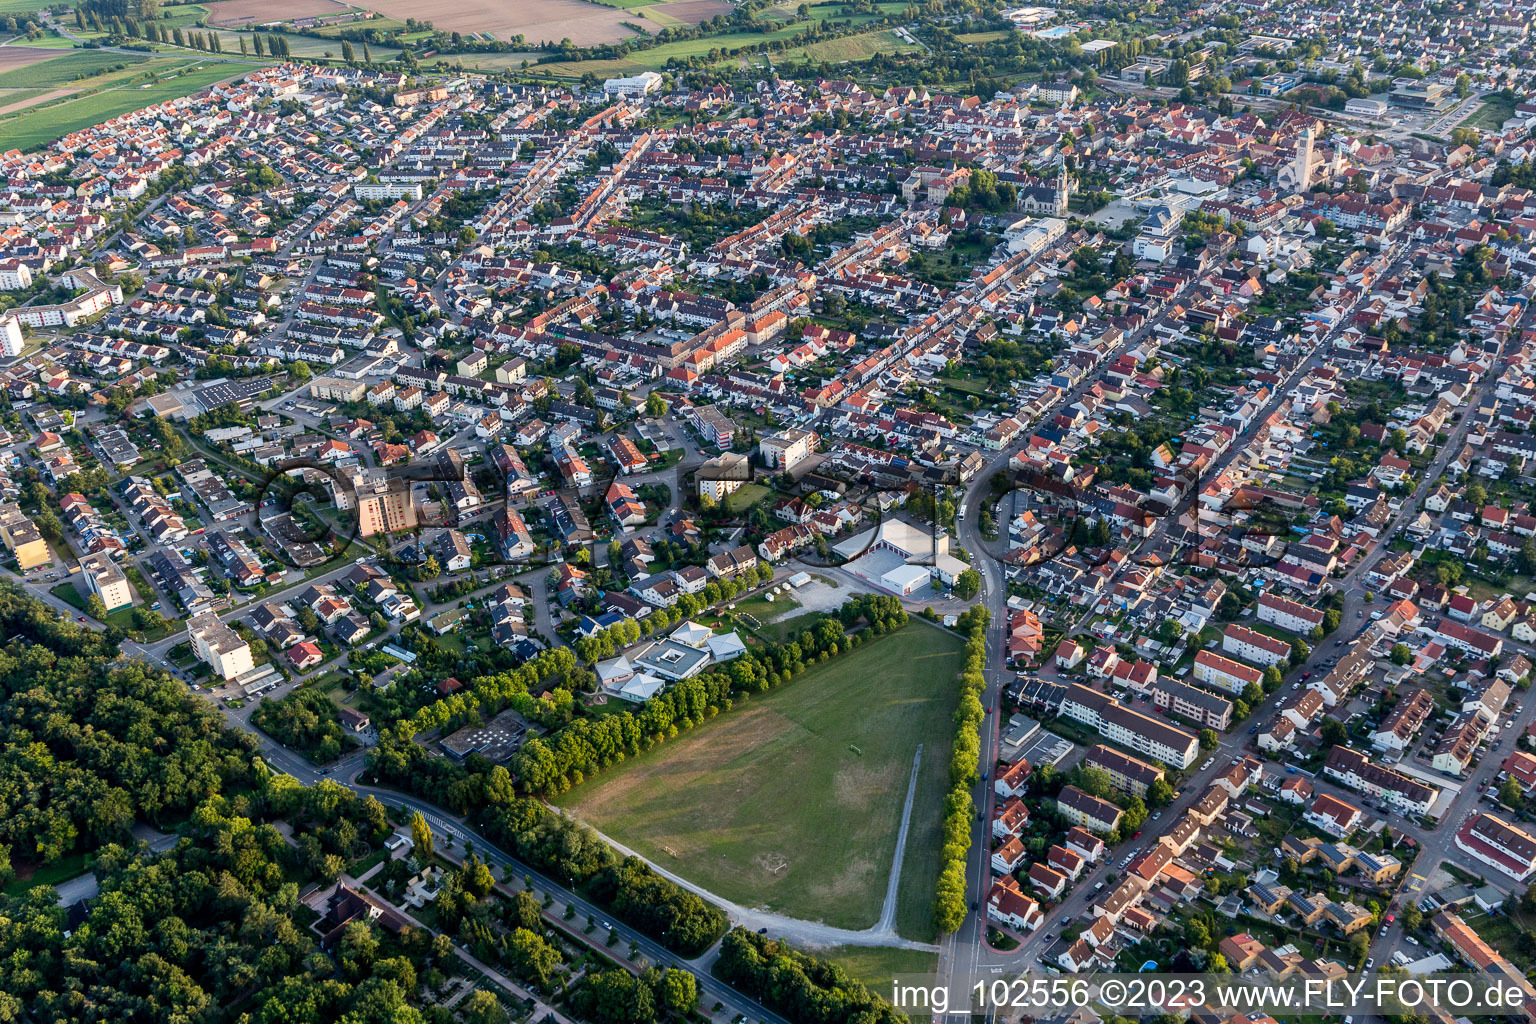 Aerial view of Hockenheim in the state Baden-Wuerttemberg, Germany